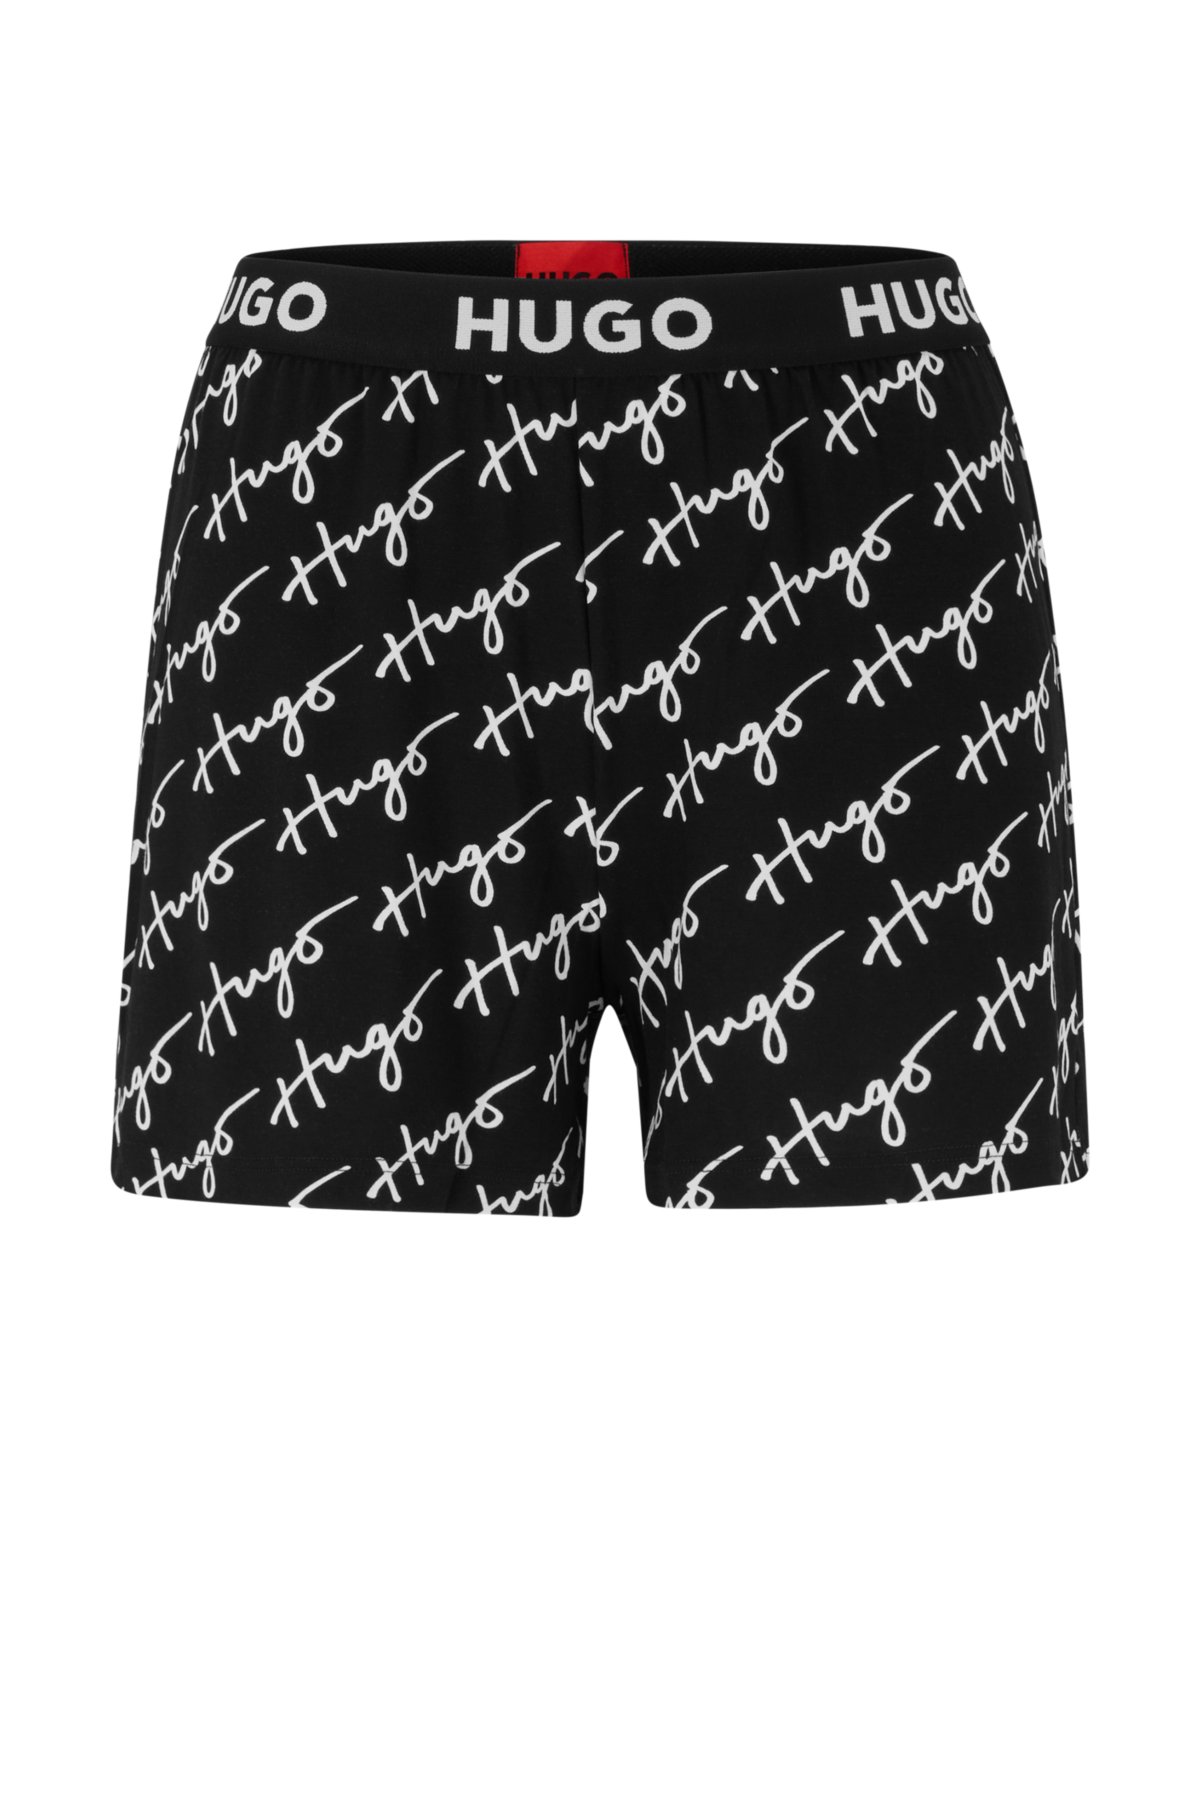 - with Jersey HUGO logos shorts original and pajama handwritten